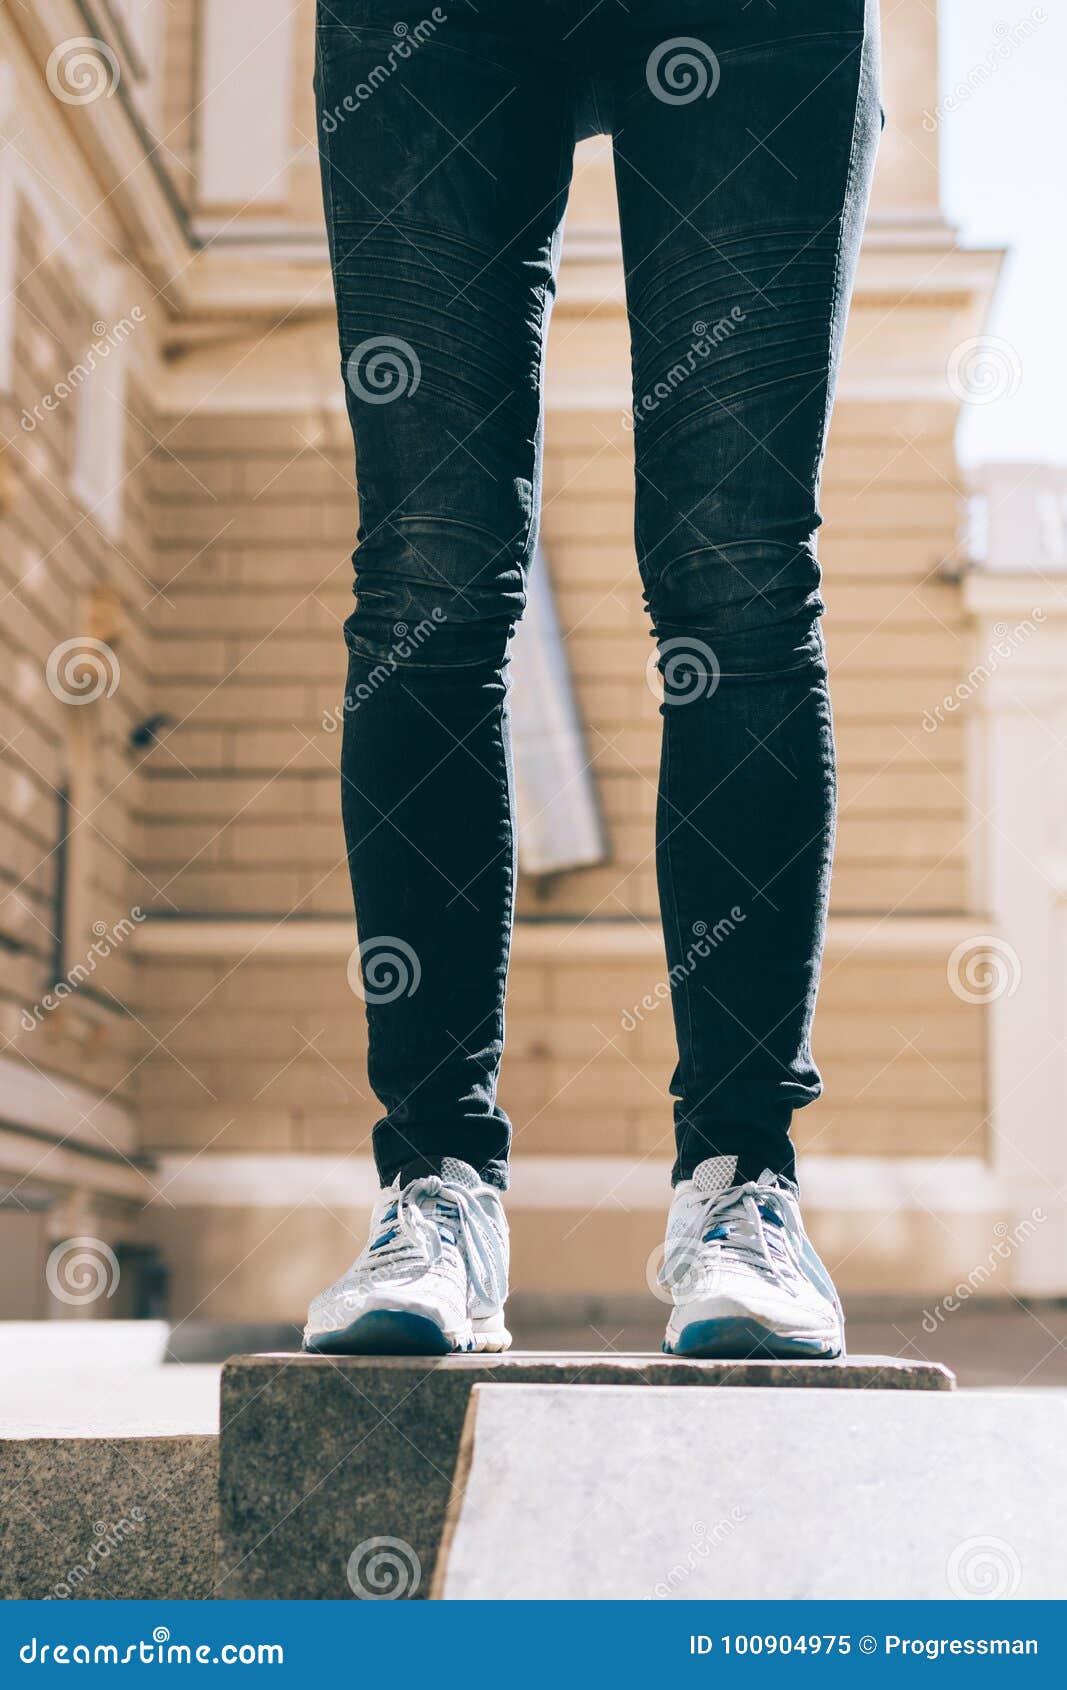 Slender Women S Legs in Jeans and Sneakers Stock Image - Image of dark ...